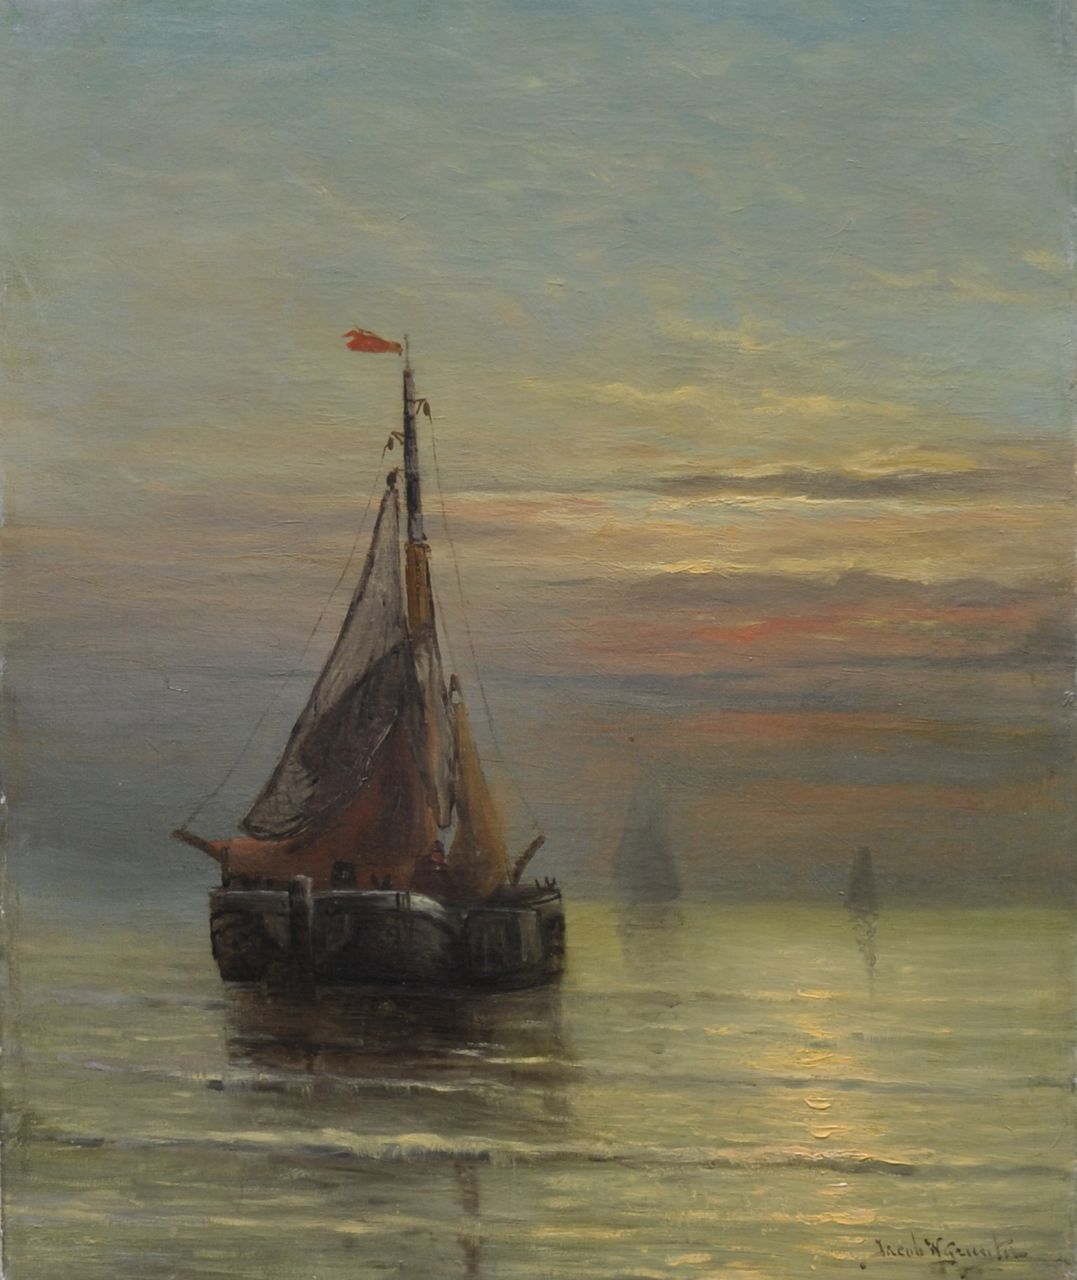 Gruijter J.W.  | Jacob Willem Gruijter, Fishing boats along the coast, oil on canvas 50.0 x 40.0 cm, signed l.r.